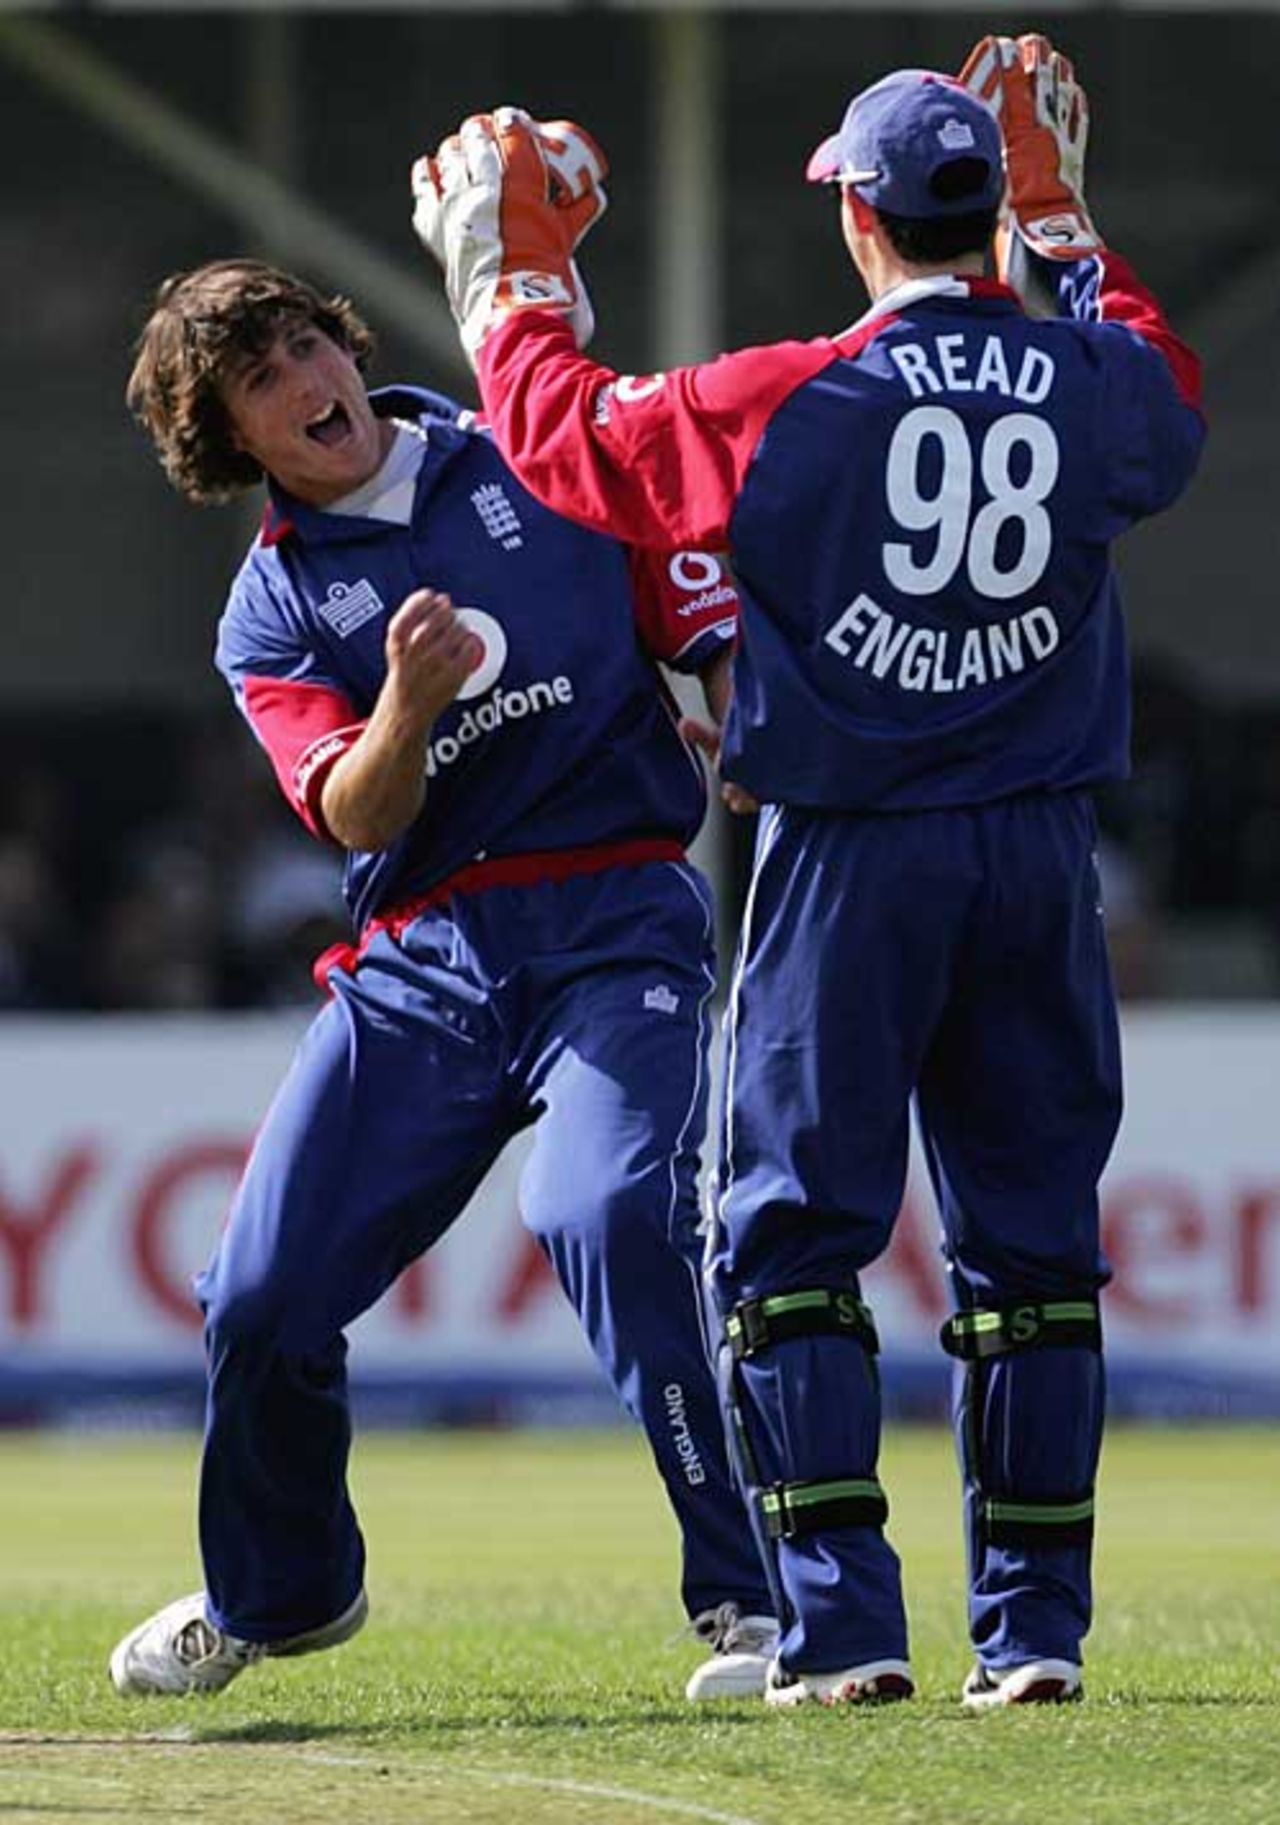 Jon Lewis celebrates with Chris Read after bowling Shahid Afridi, England v Pakistan, 5th ODI, Edgbaston, September 10, 2006